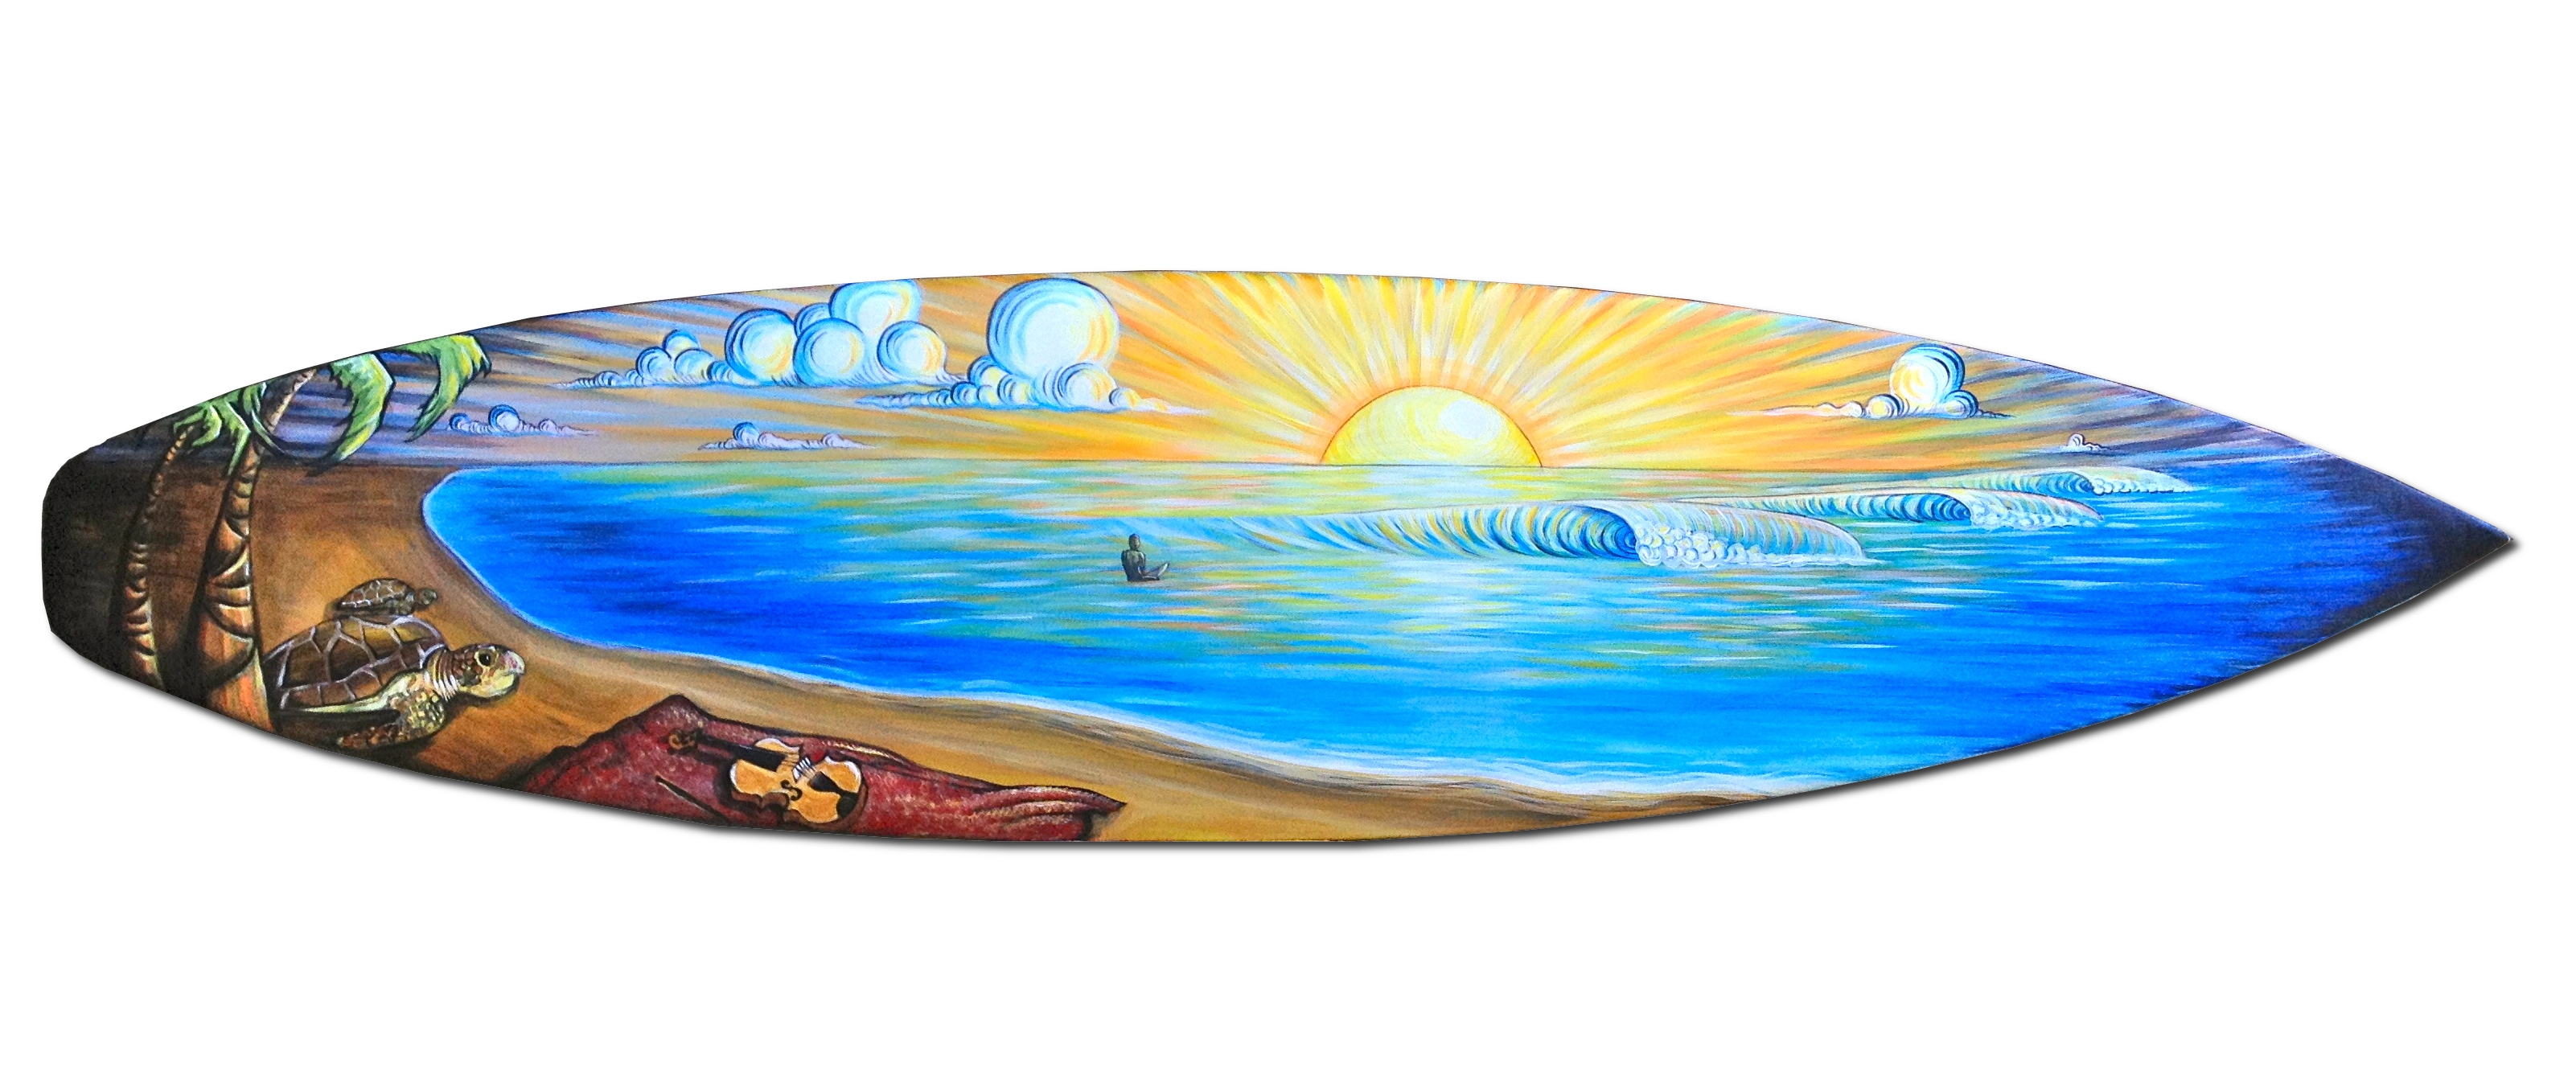 Painted Surfboards | Katy Helen Art